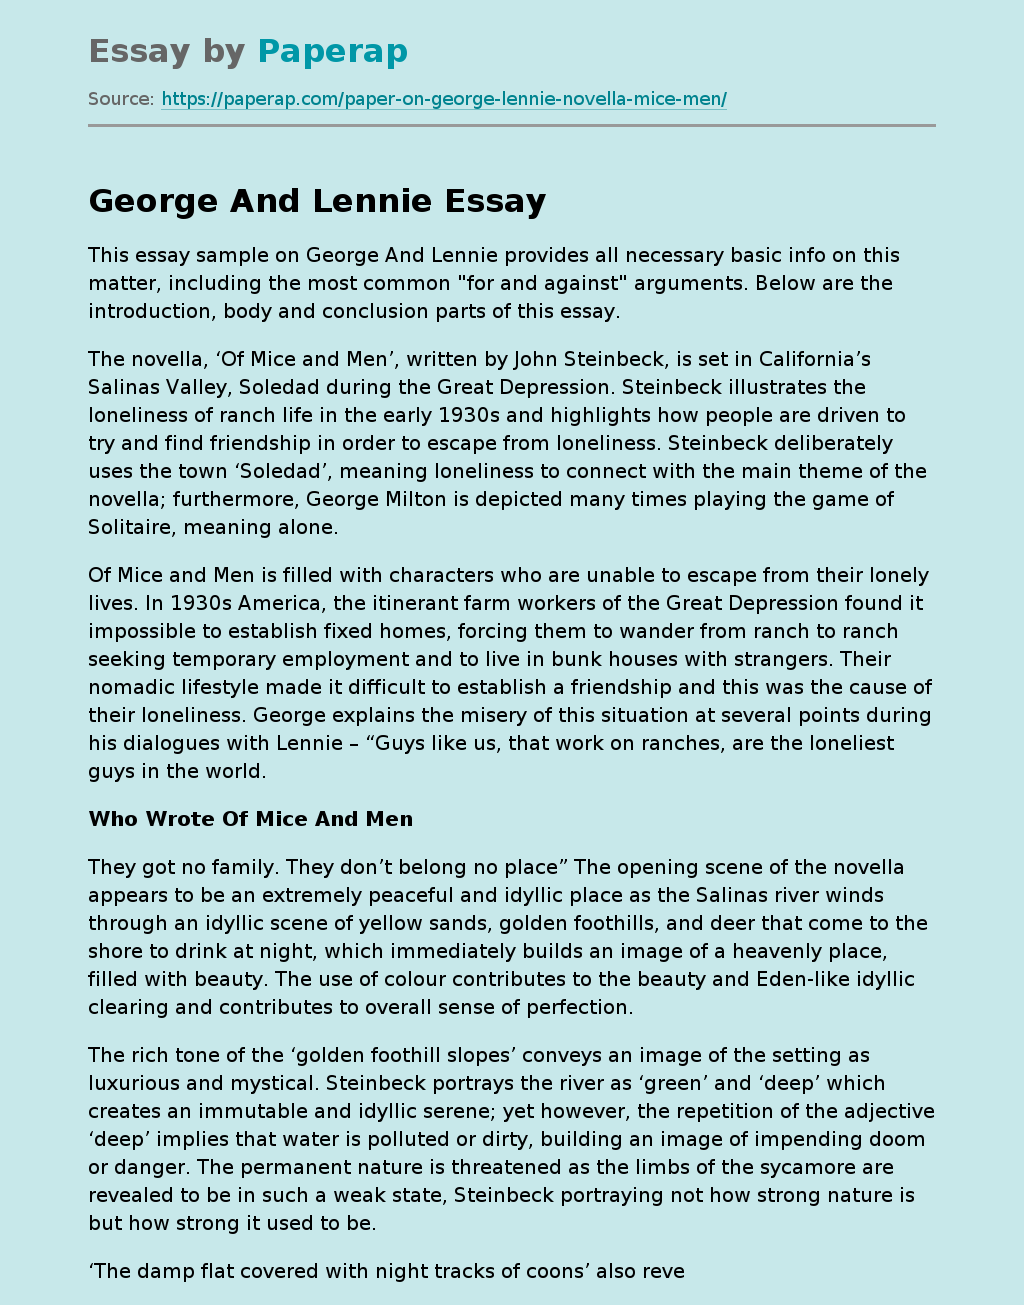 George And Lennie